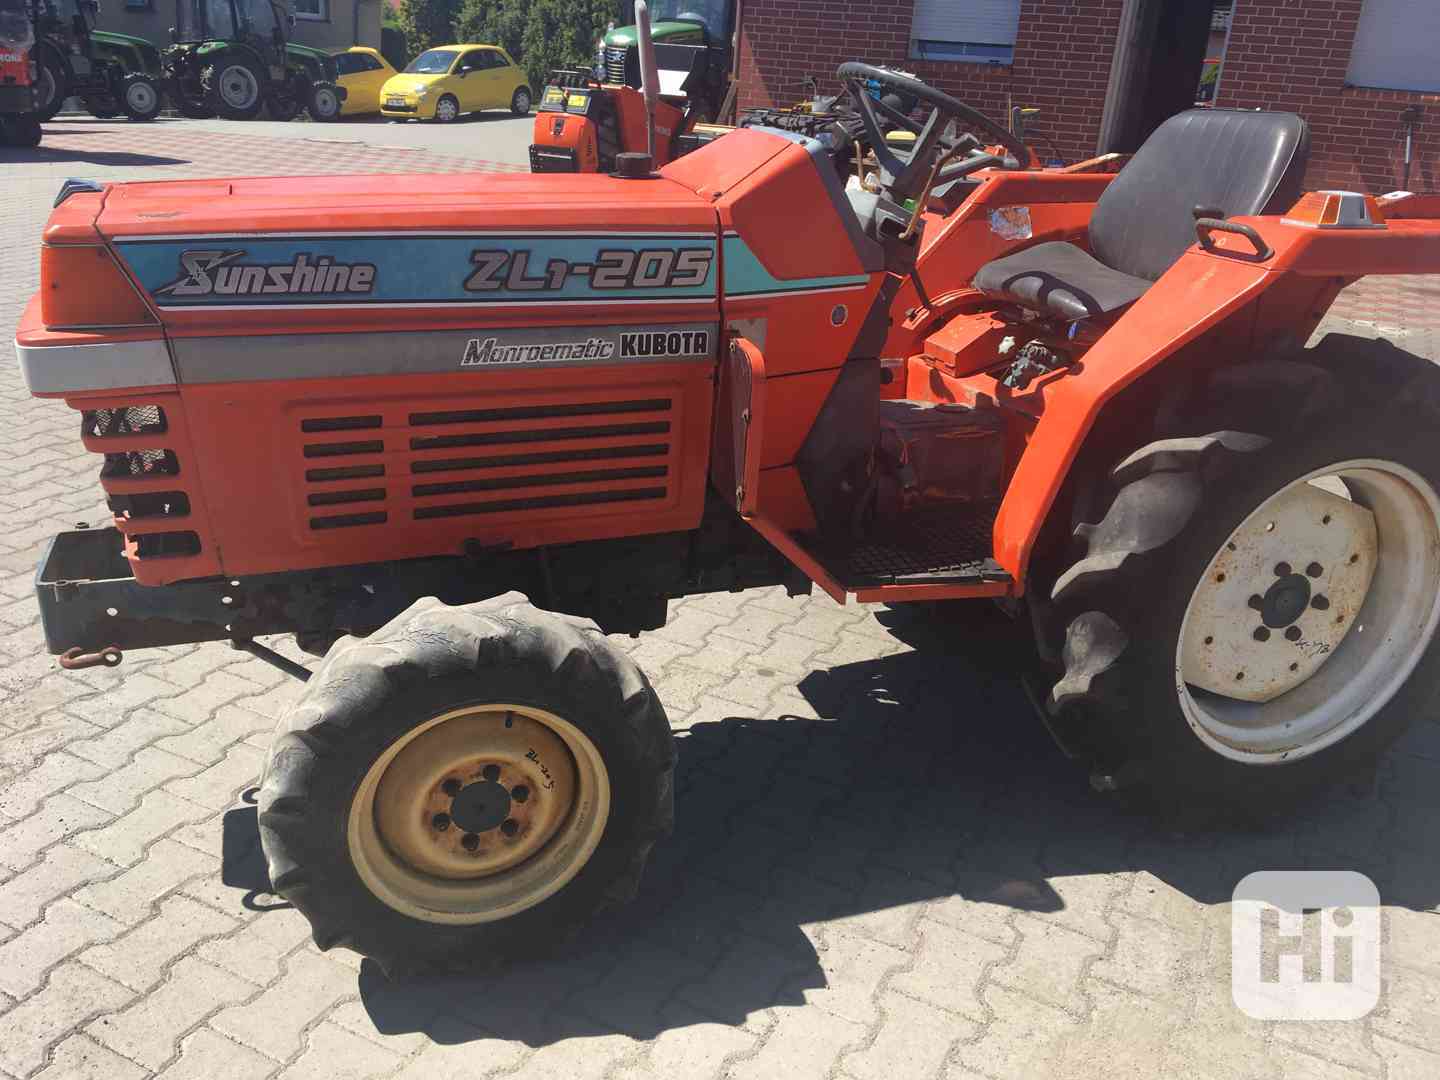 Traktor KUBOTA sunshine ZL1-205, 20Hp, 4x4 - foto 1